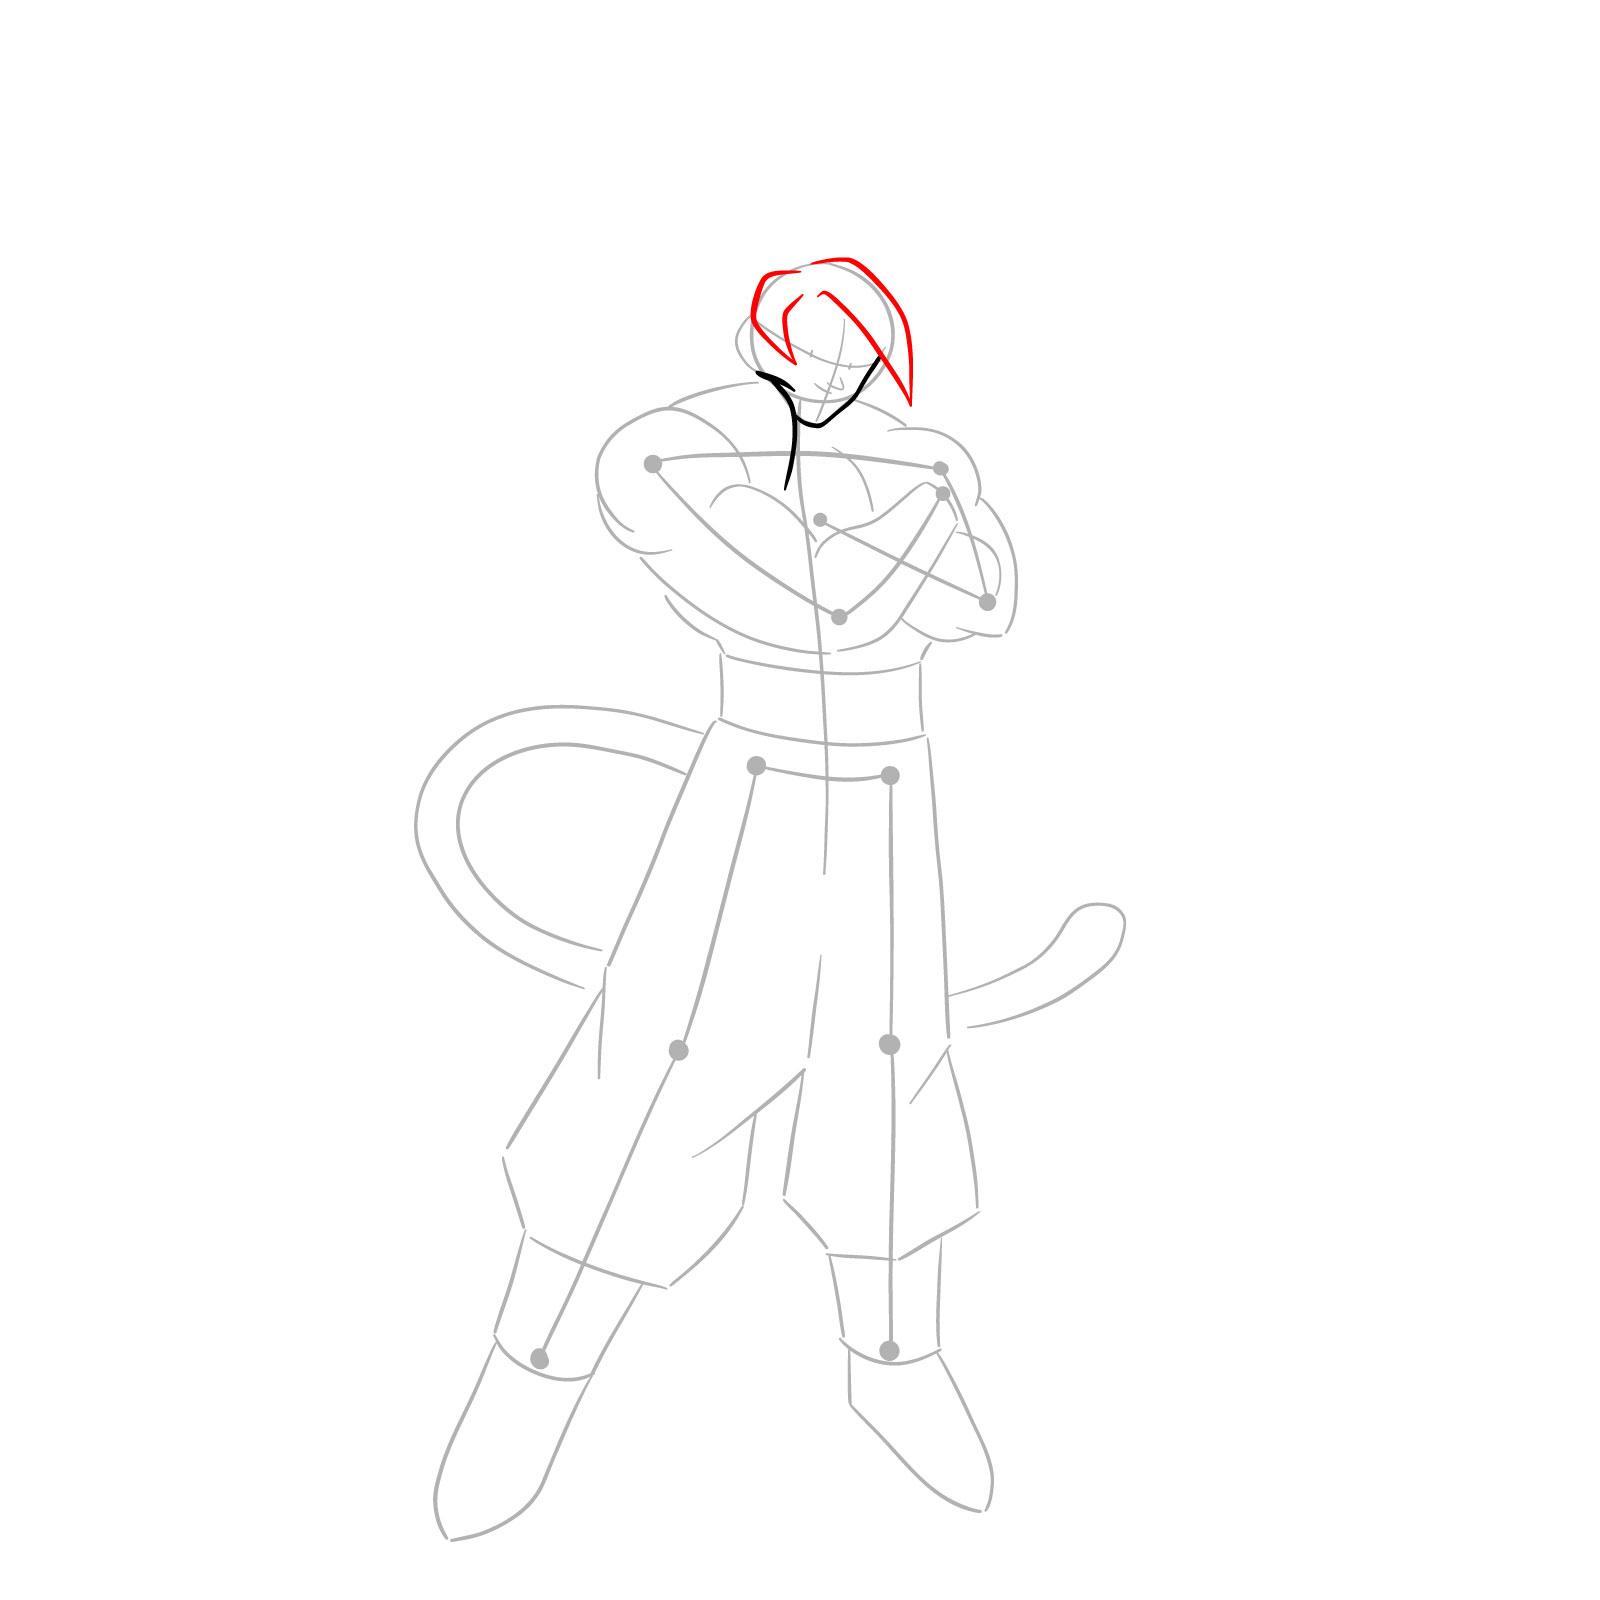 How to tát draw Goku Super Saiyan 4 - step 05